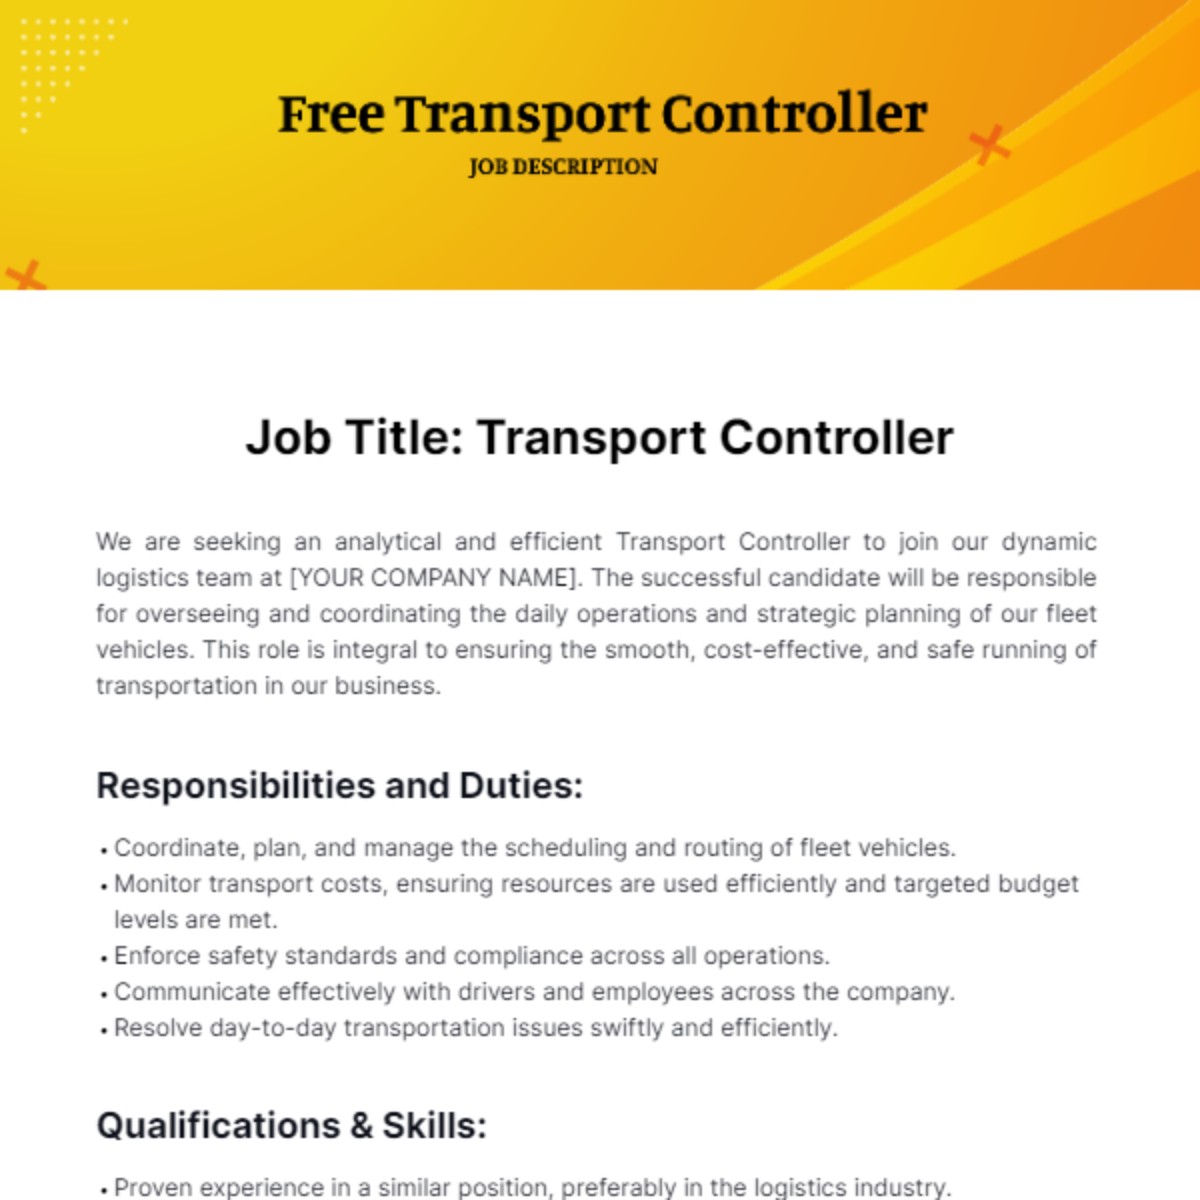 Transport Controller Job Description Template